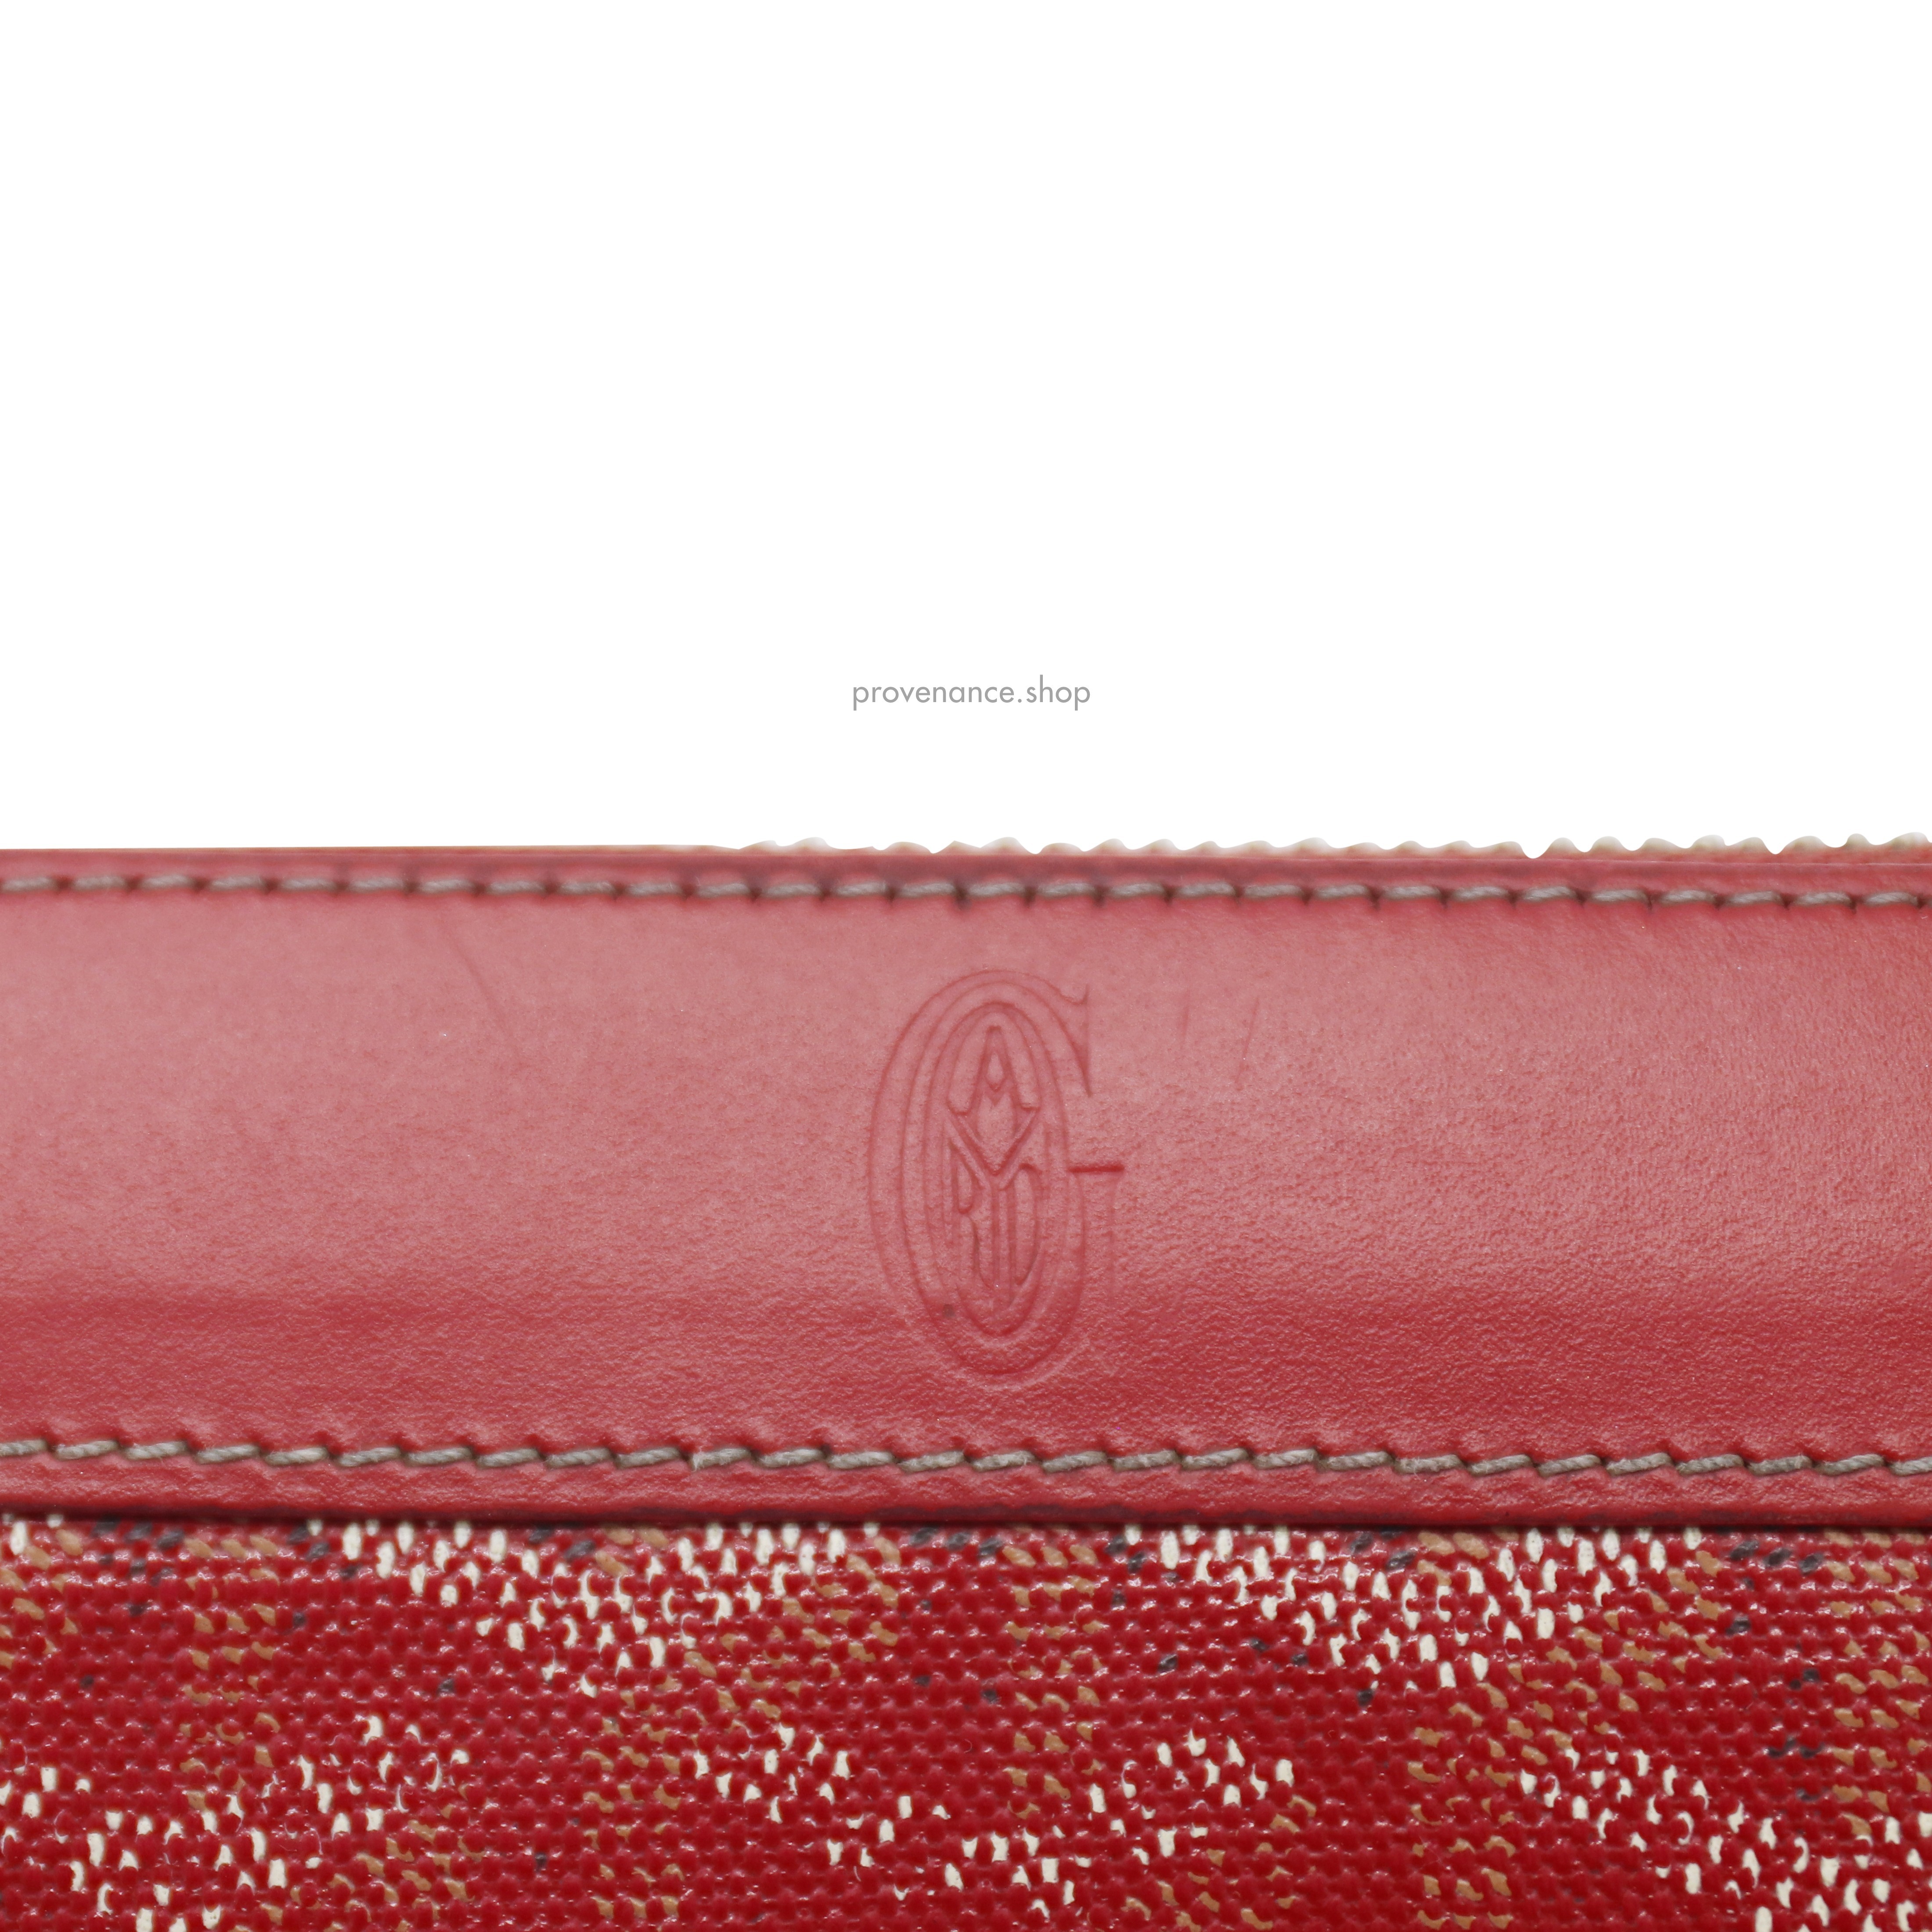 Matignon Long Wallet - Red Goyardine - 5